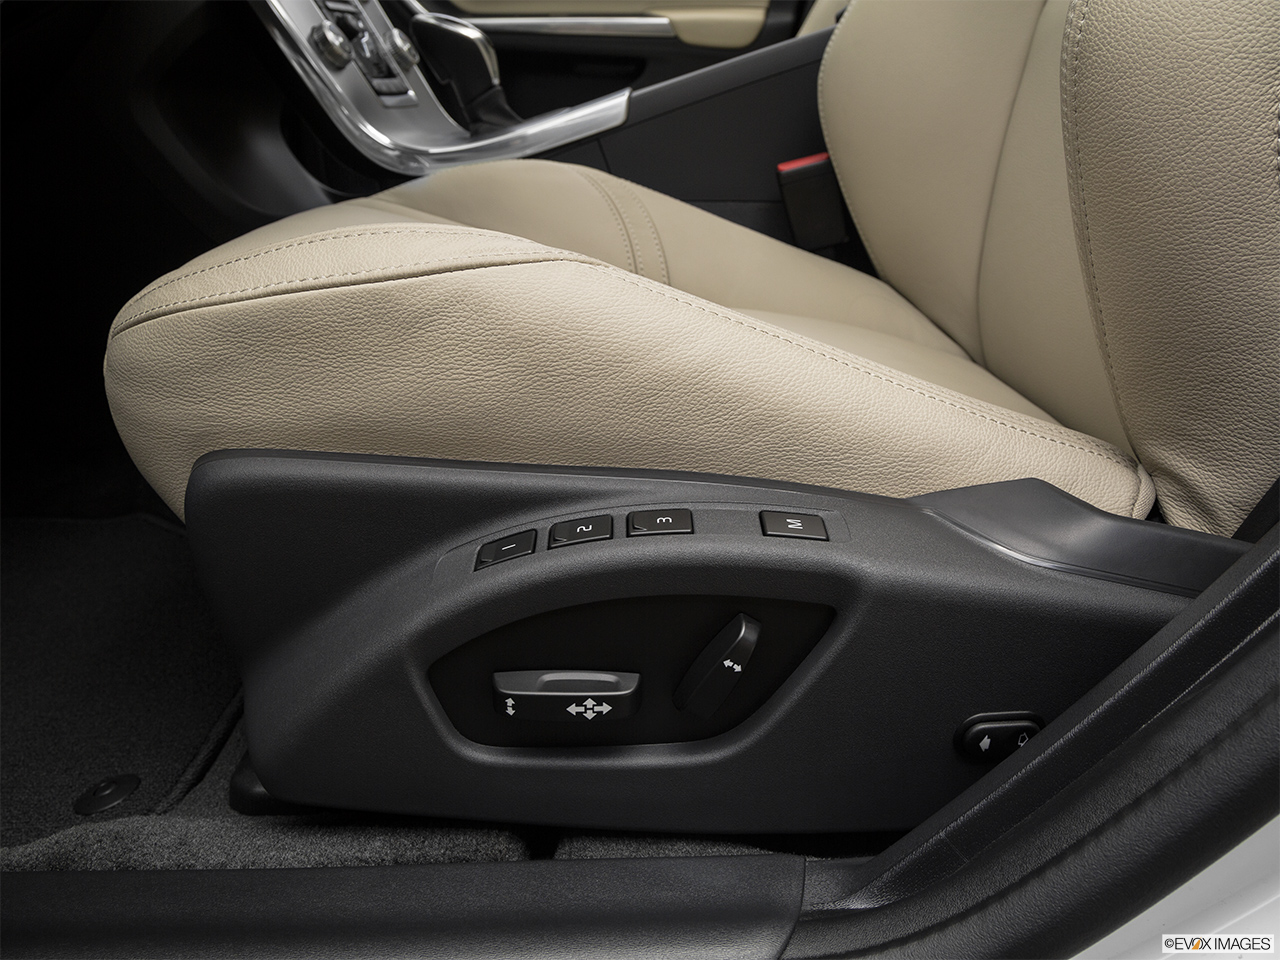 2017 Volvo V60 T5 Premier Seat Adjustment Controllers. 